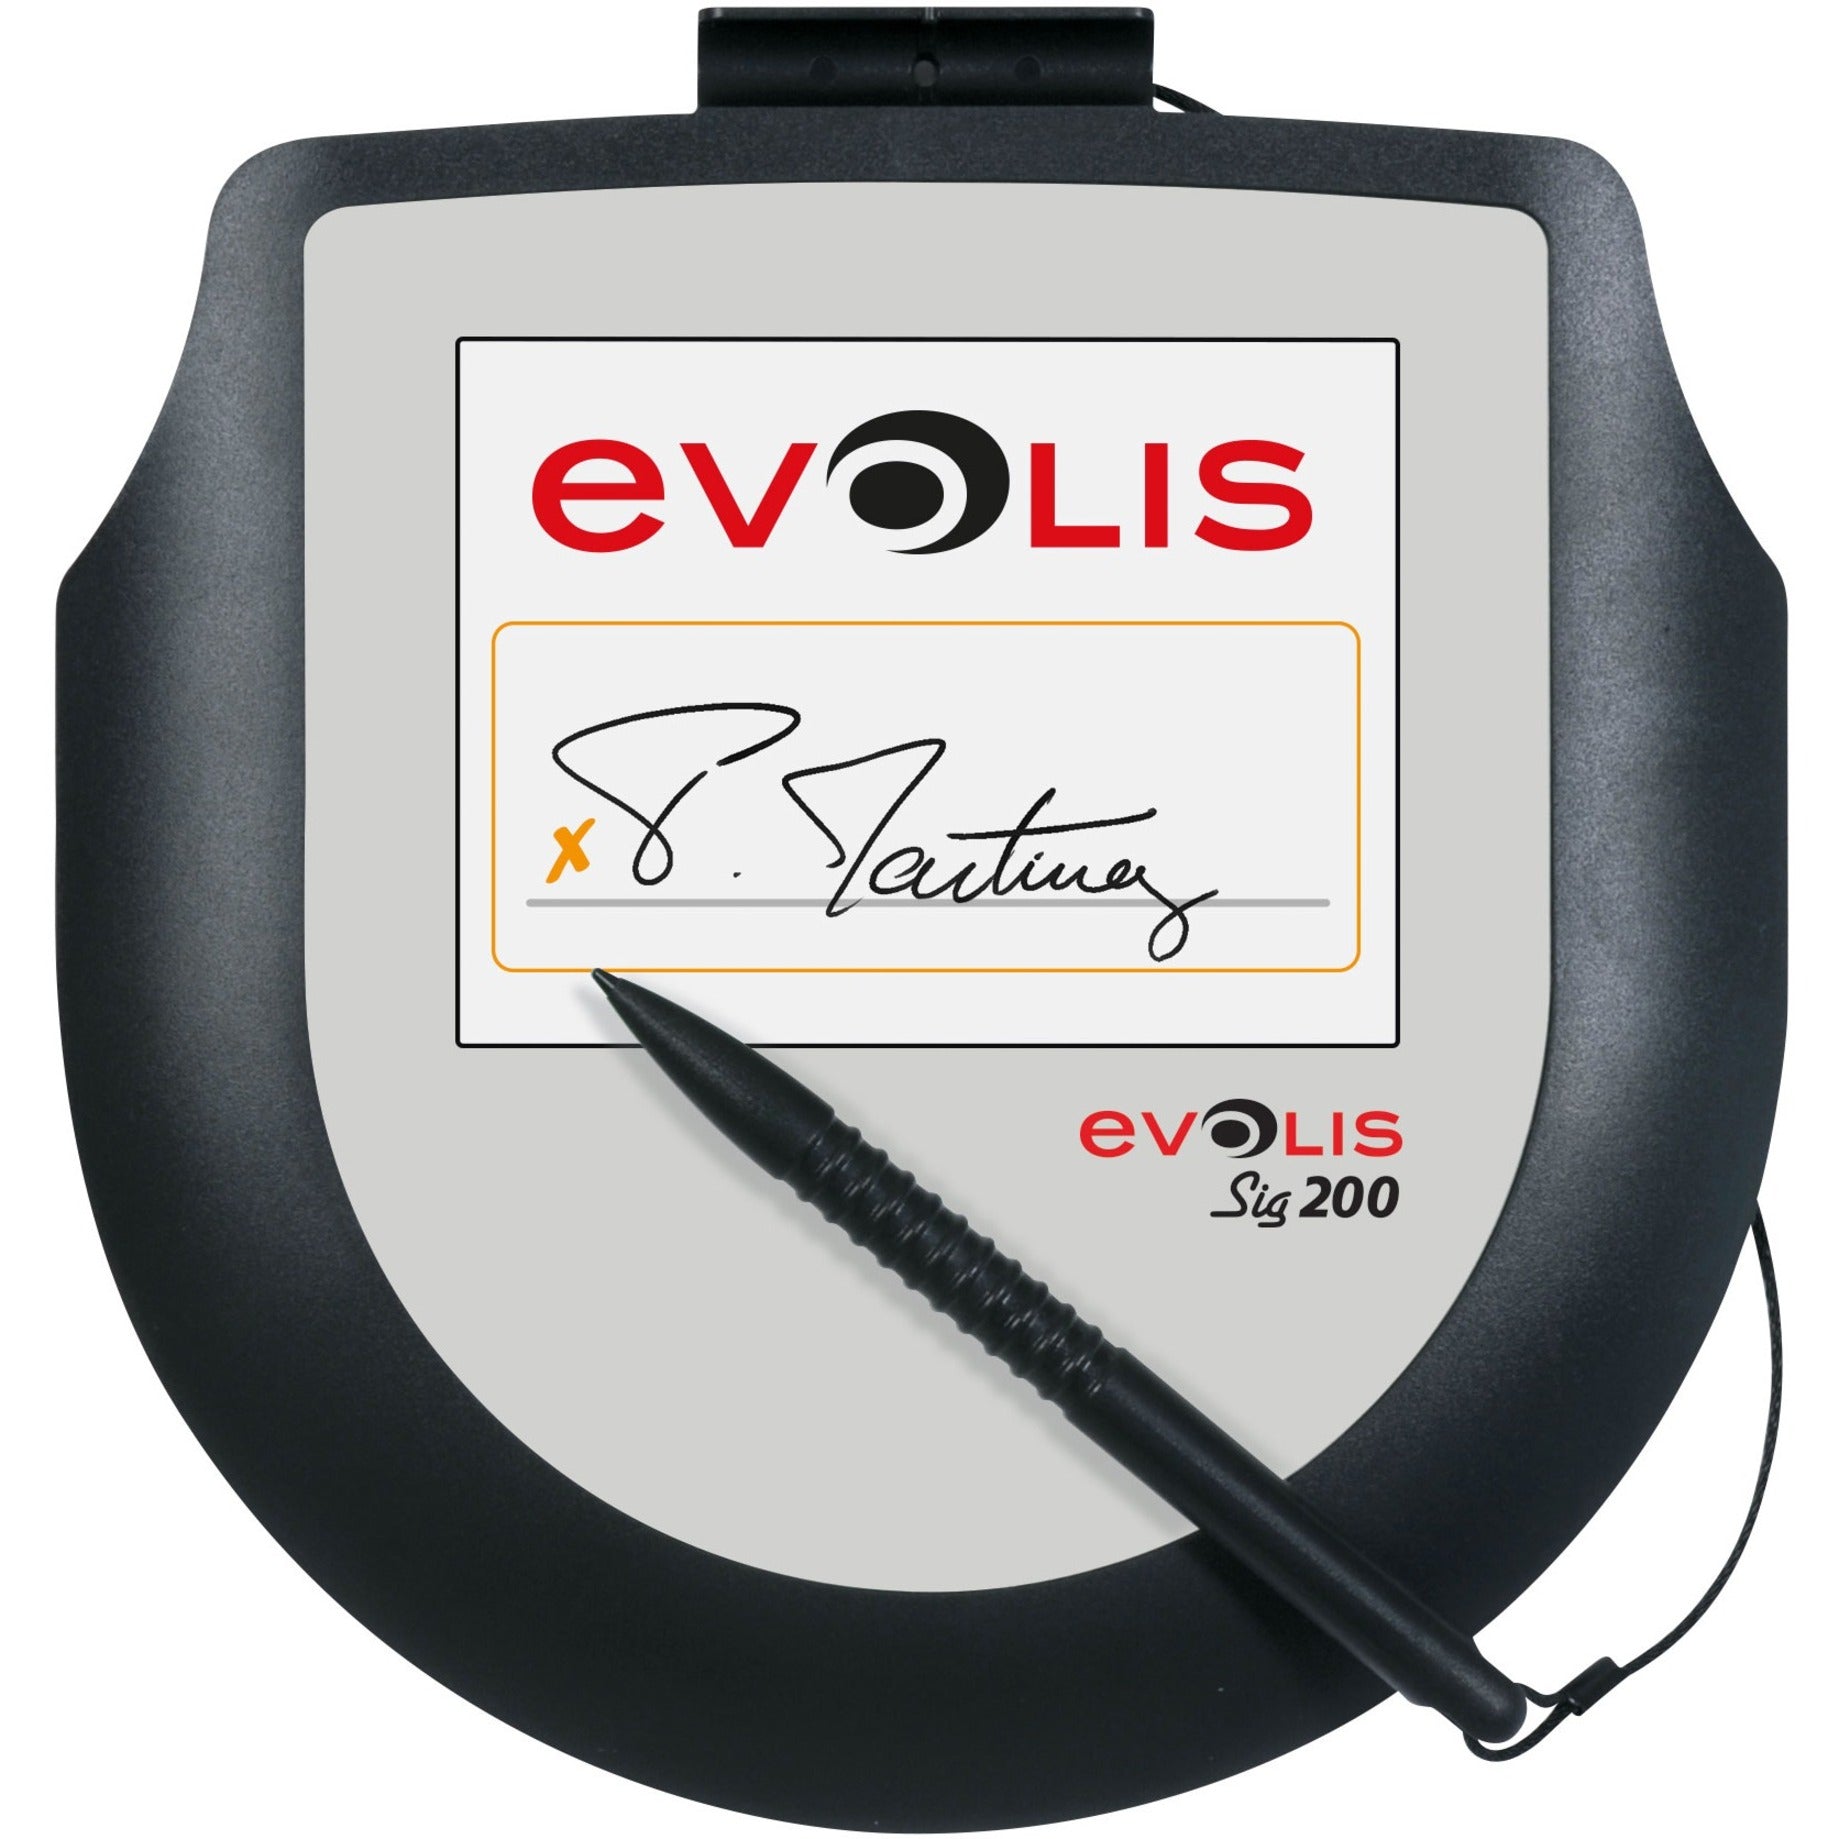 Evolis ST-CE1075-2-UEVL Sig200 Signature Pad, 2 Year Limited Warranty, USB Interface, LCD Display